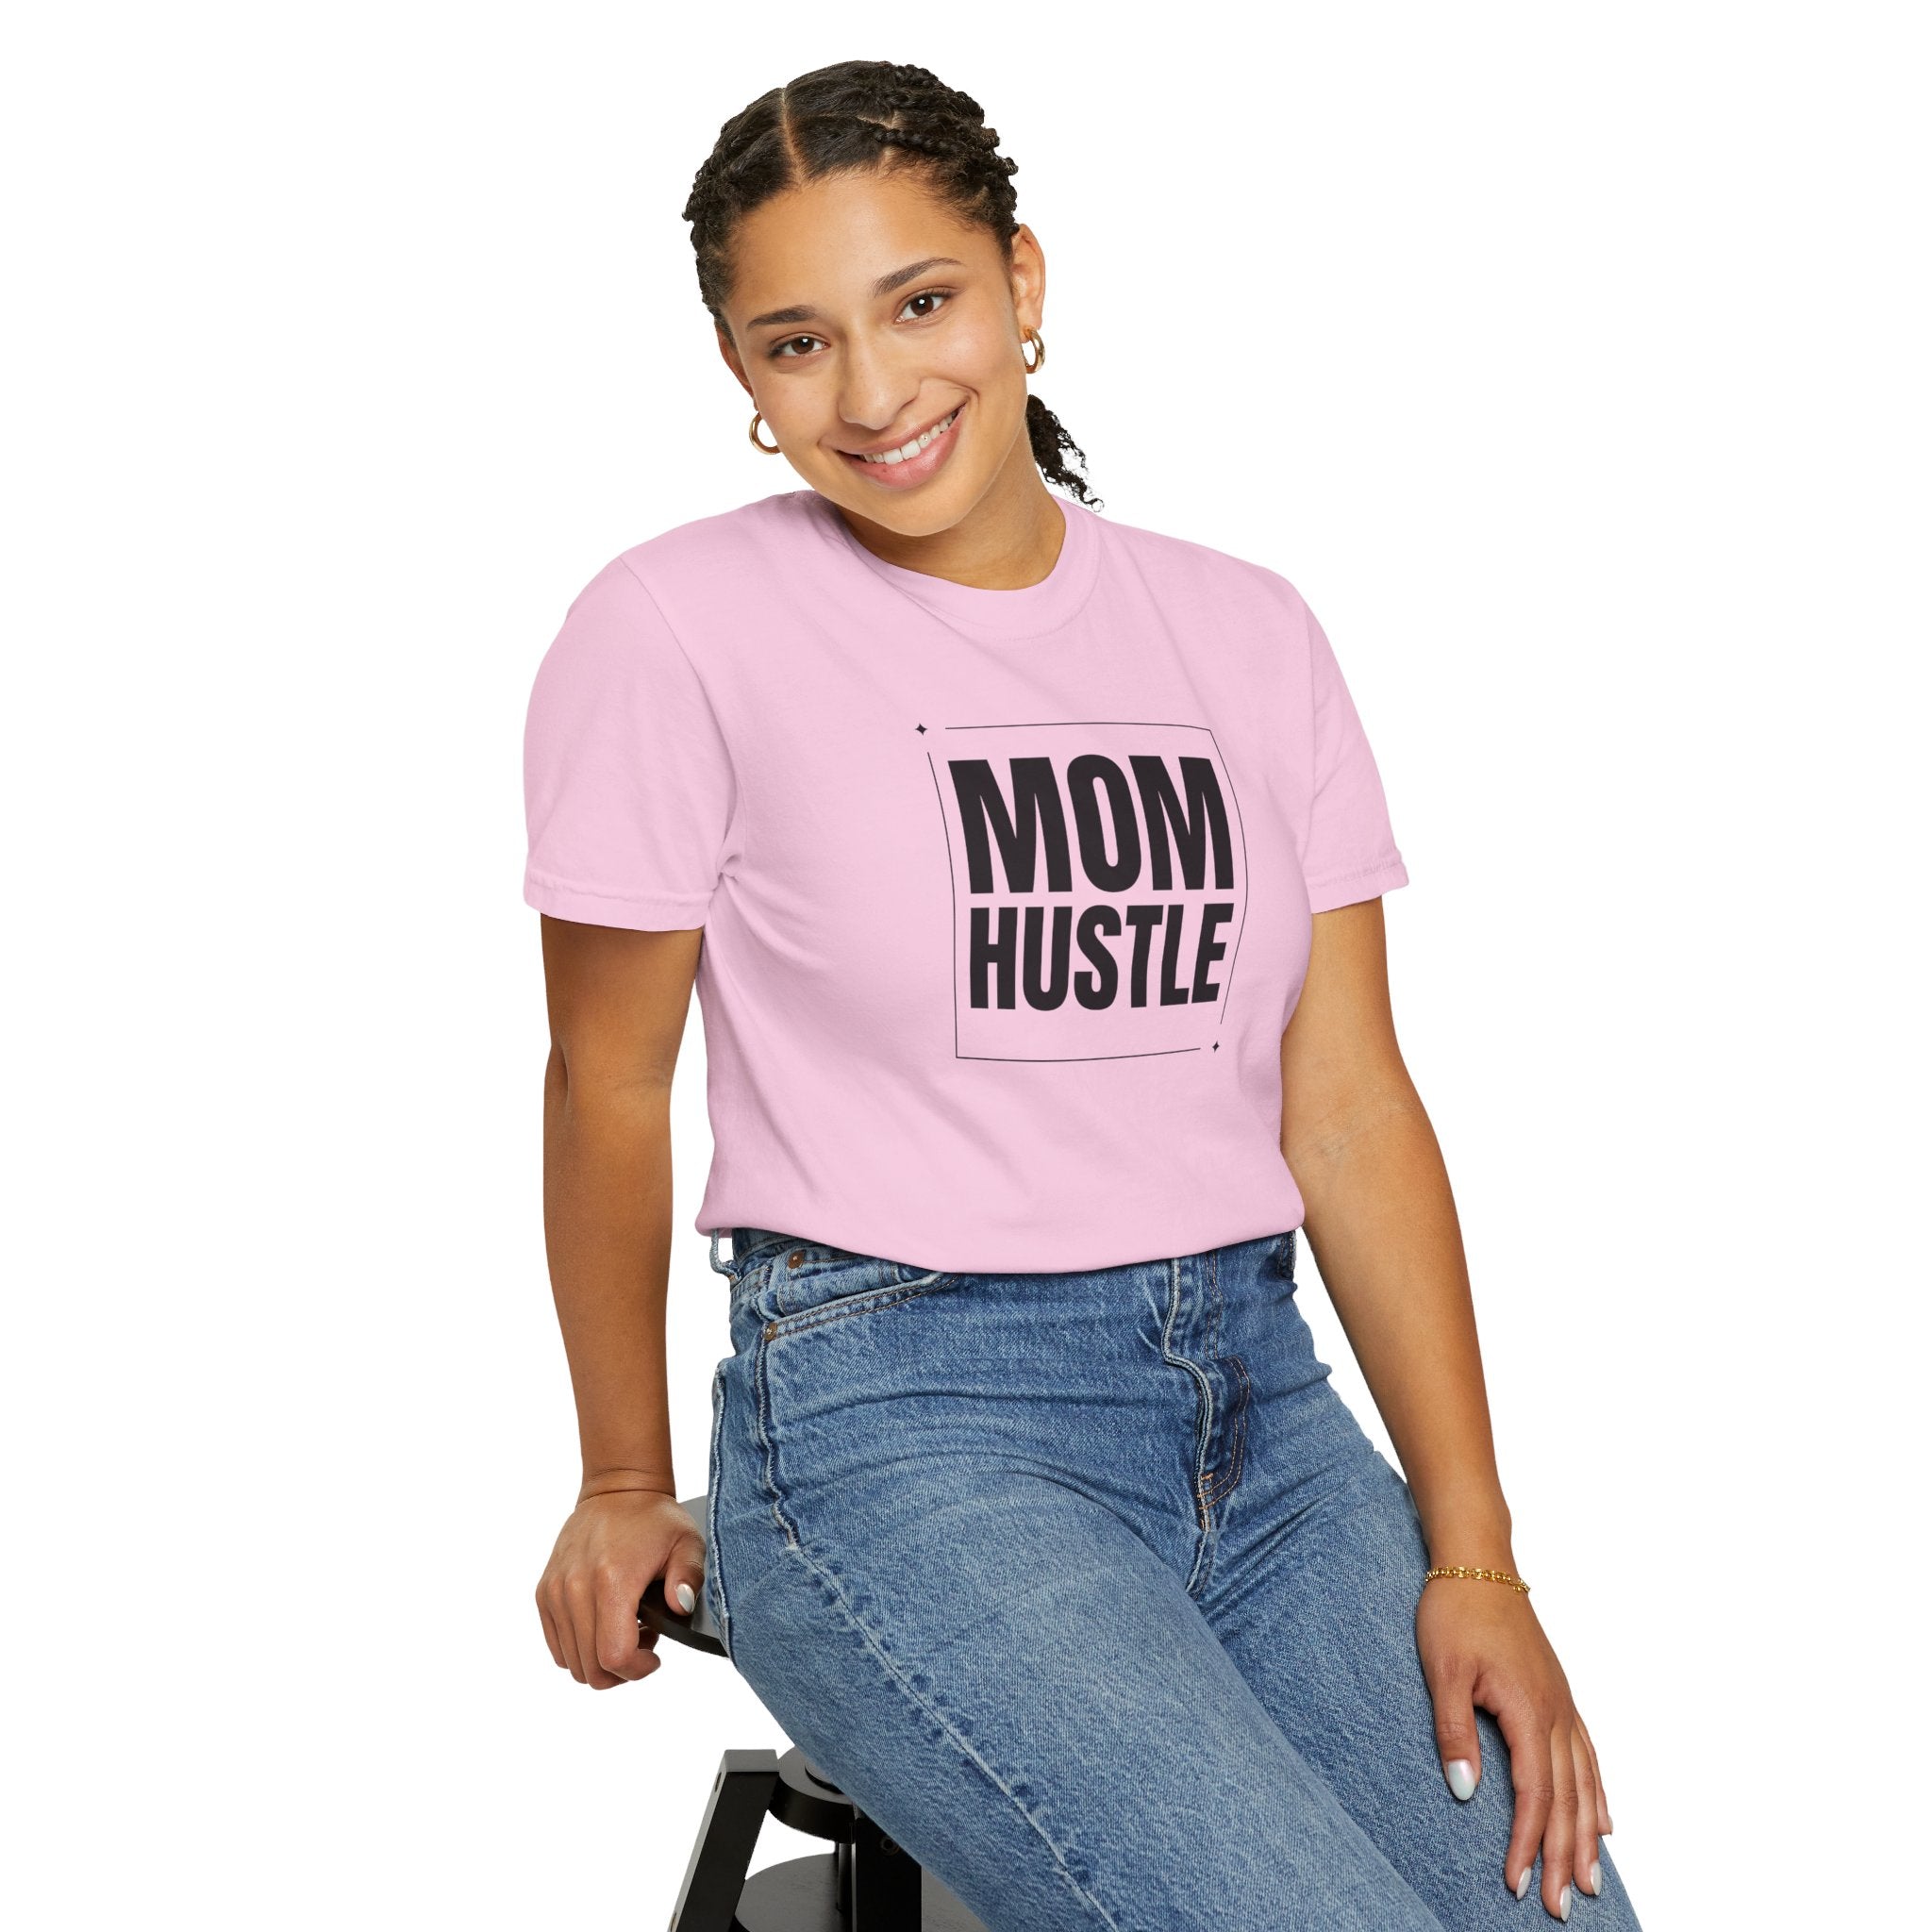 Mom Hustle 2 T-shirt